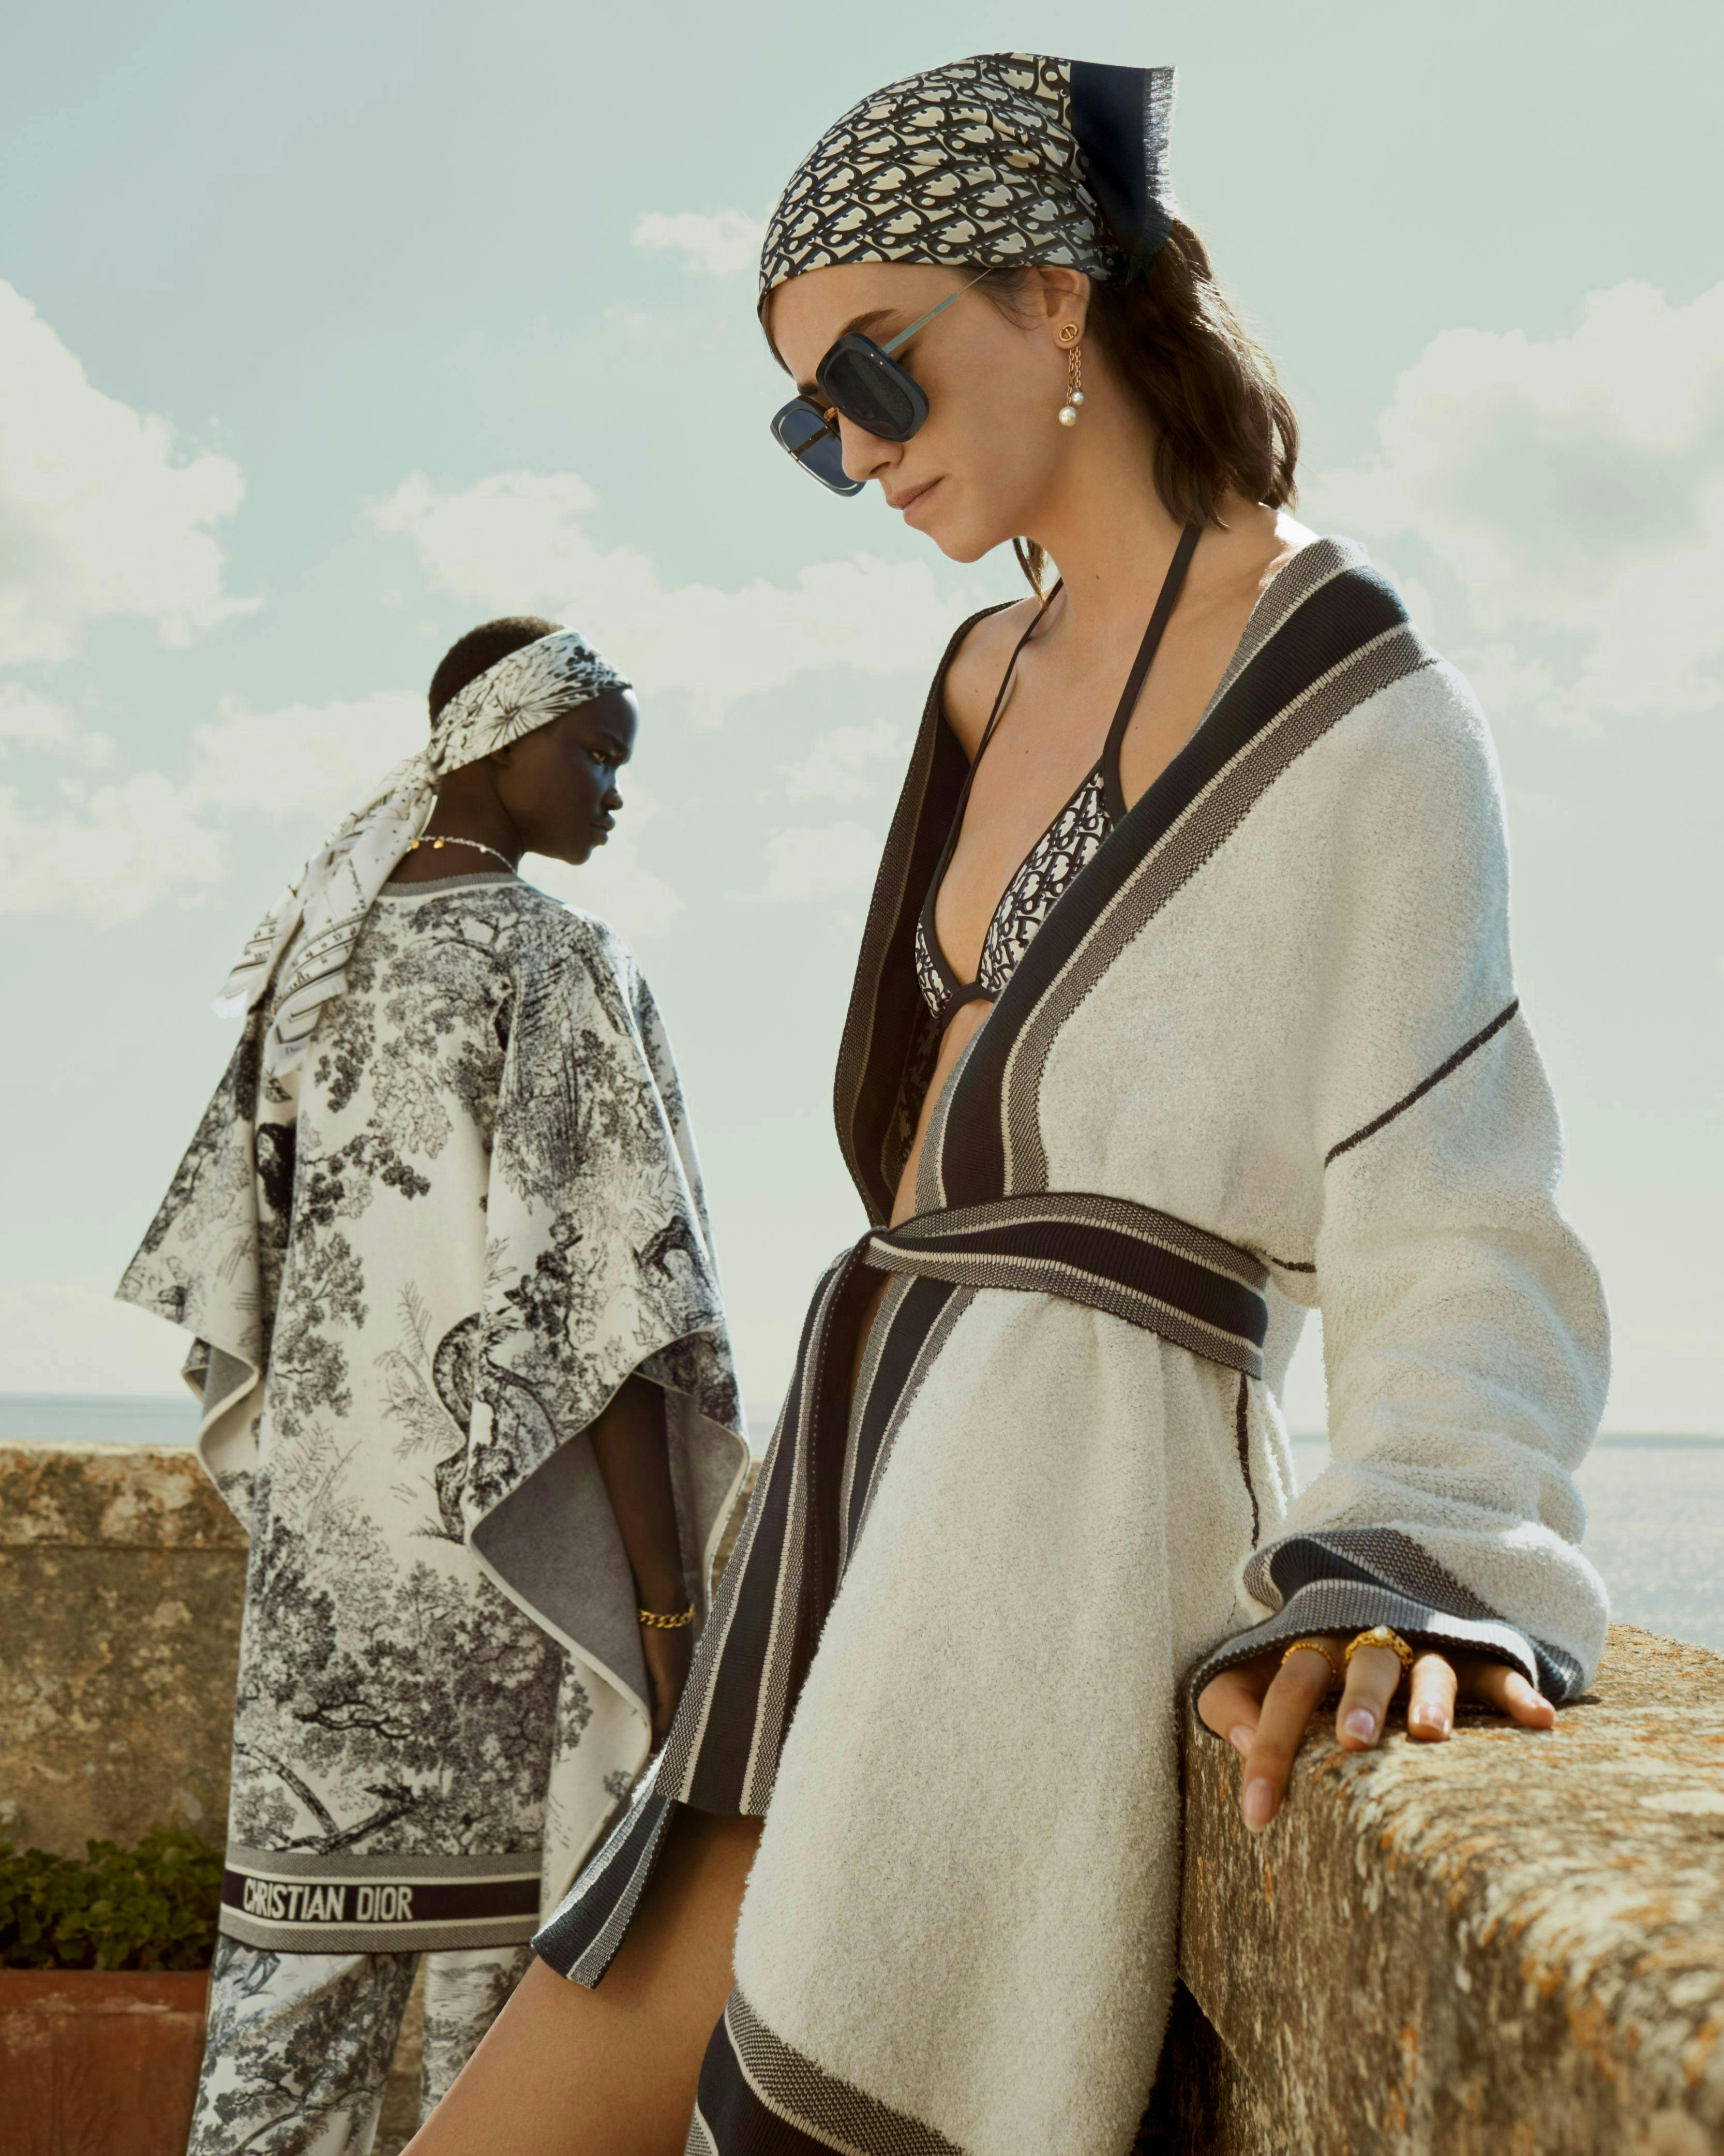 apparel clothing robe fashion sunglasses accessory accessories human person